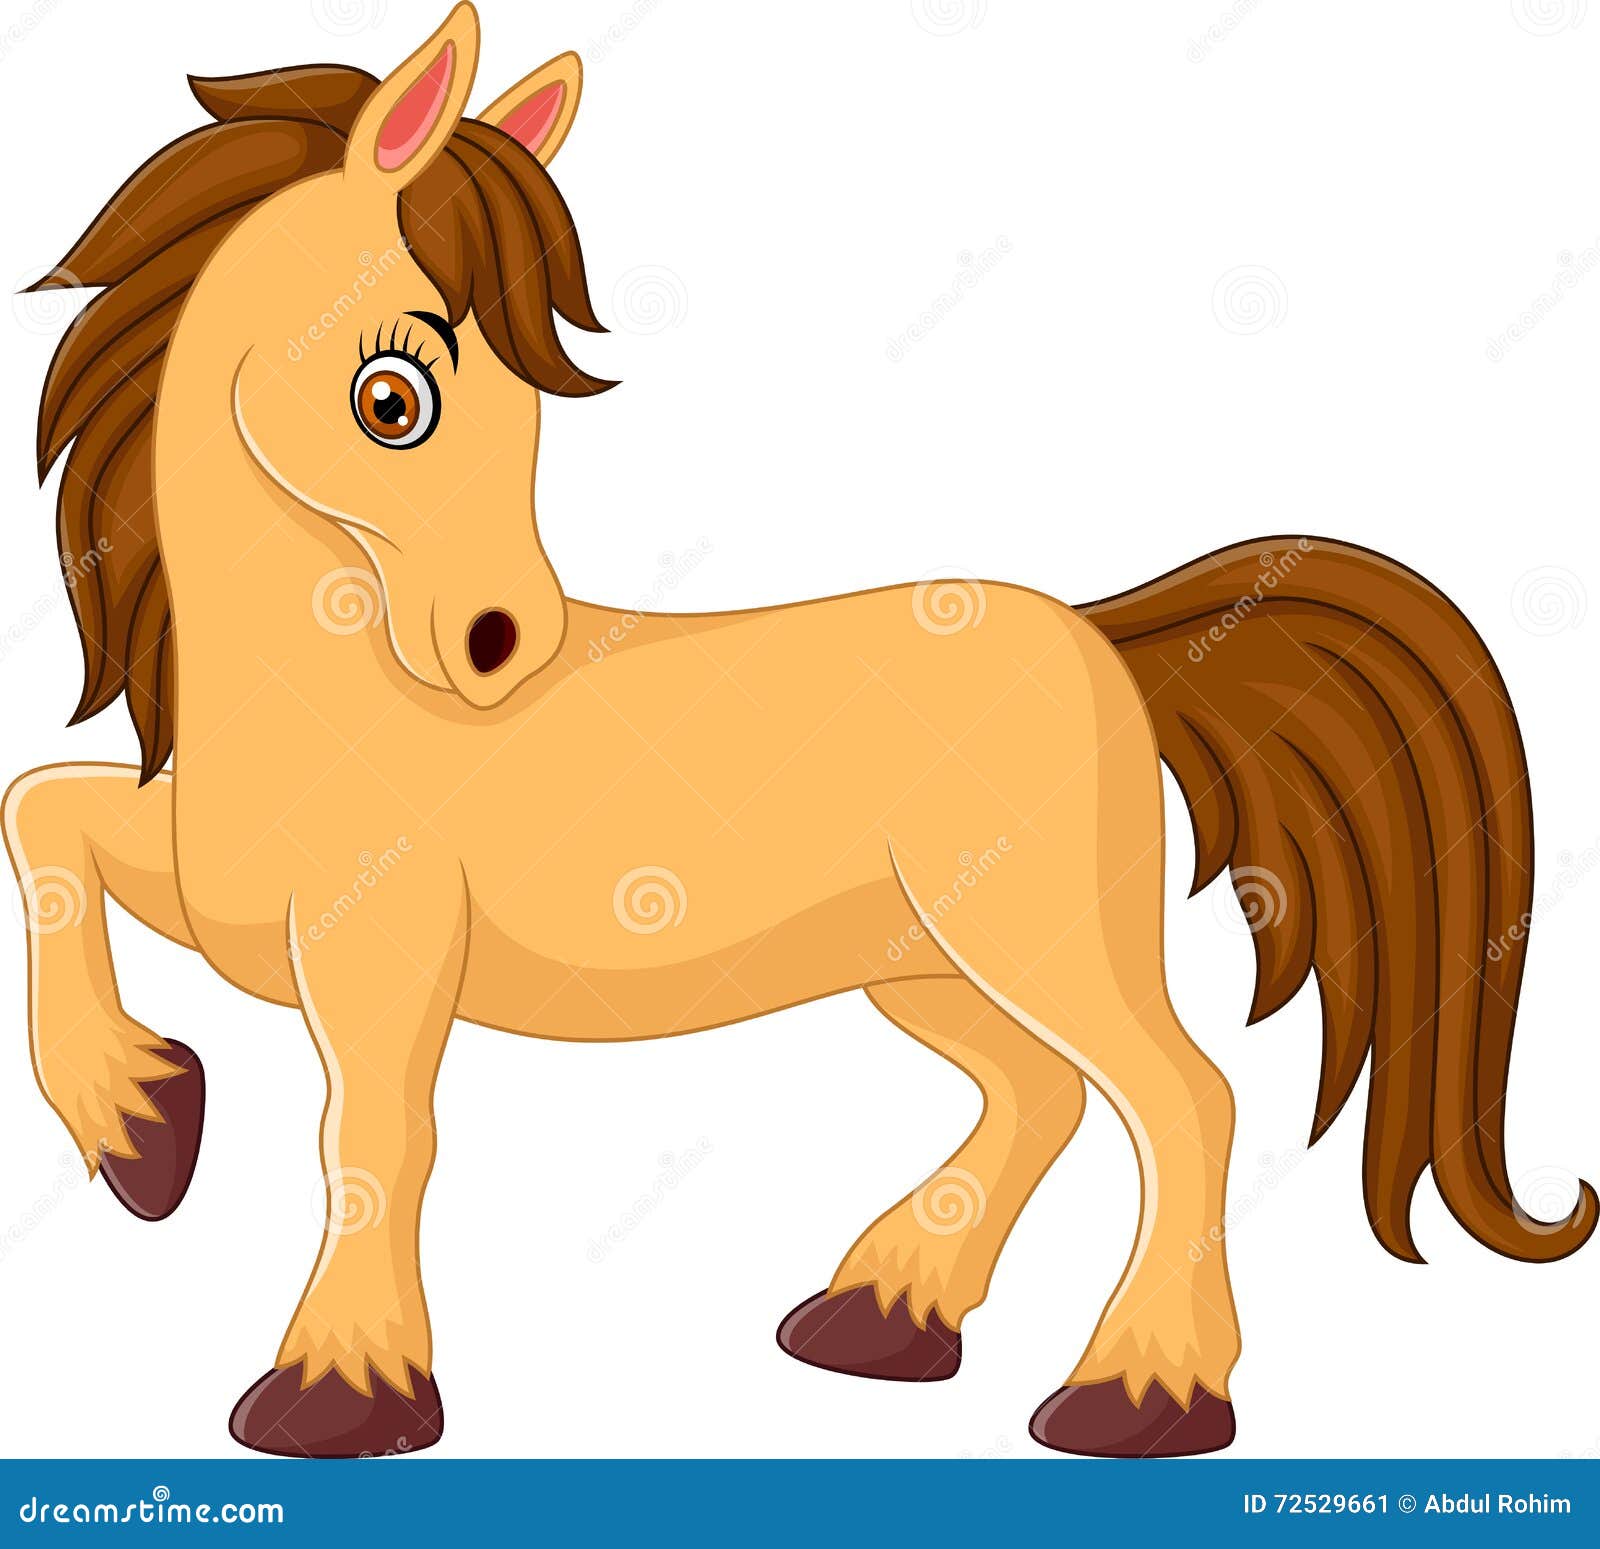 Cute Horse Cartoon Isolated on White Background Stock Vector - Illustration  of eyes, mane: 72529661